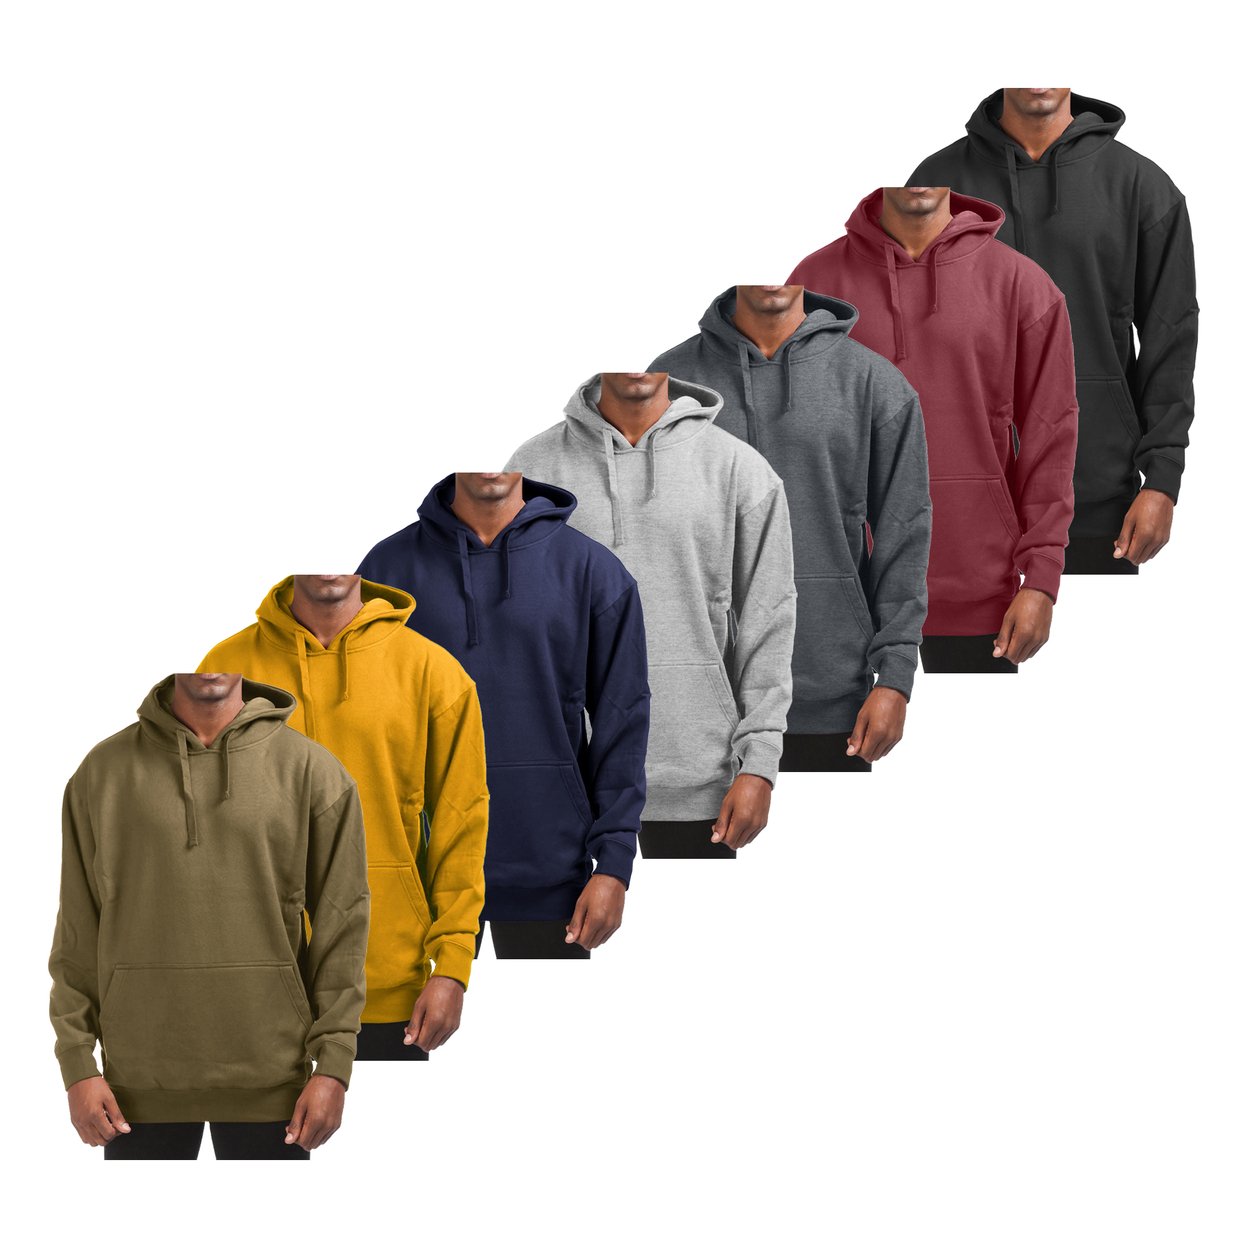 2-Pack: Men's Super-Soft Winter Warm Cotton-Blend Fleece Pullover Hoodie With Kangaroo Pocket - Black & Red, Medium